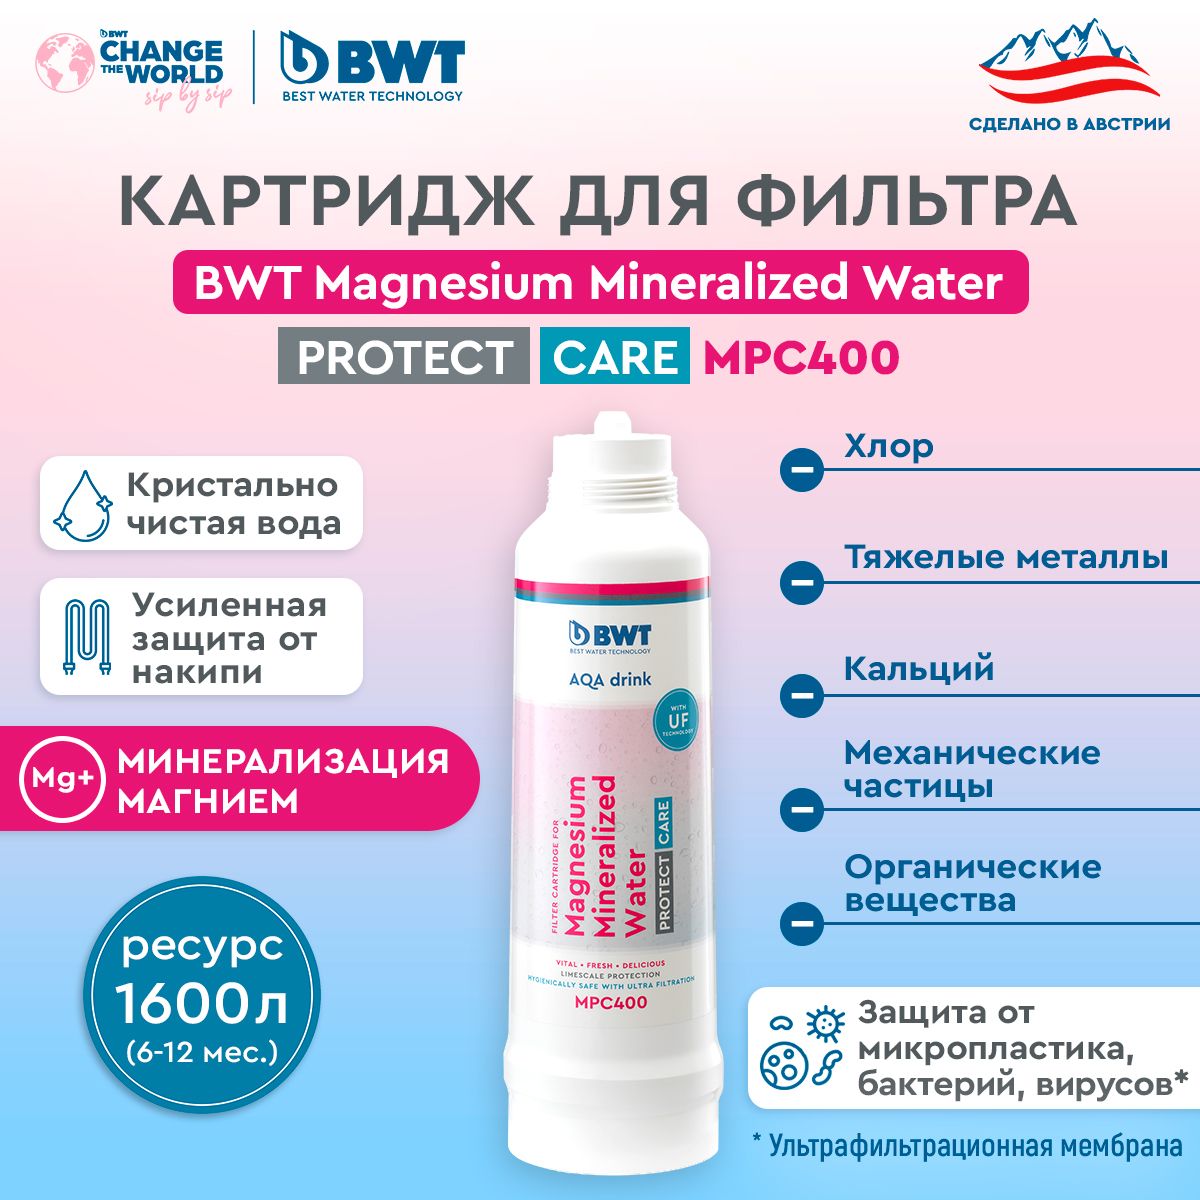 Картридж для фильтра BWT MPC400 Magnesium Mineralized Water усиленная защита